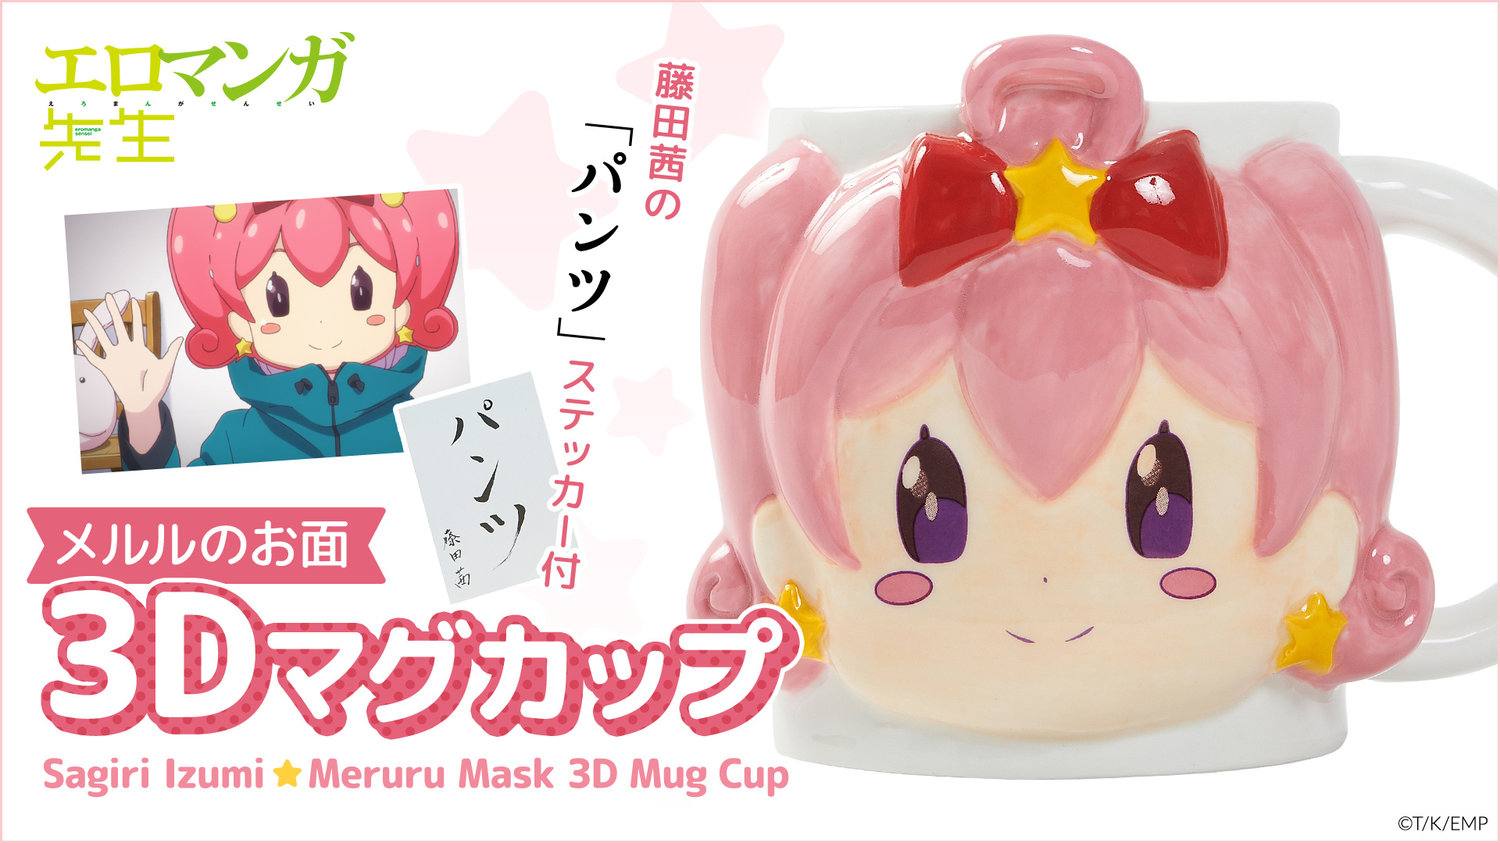 Eromanga Sensei Sagiri Izumi Meruru Mask 3D Mug Cup ~with “パンツ(undies)” sticker drawn by Akane Fujita~